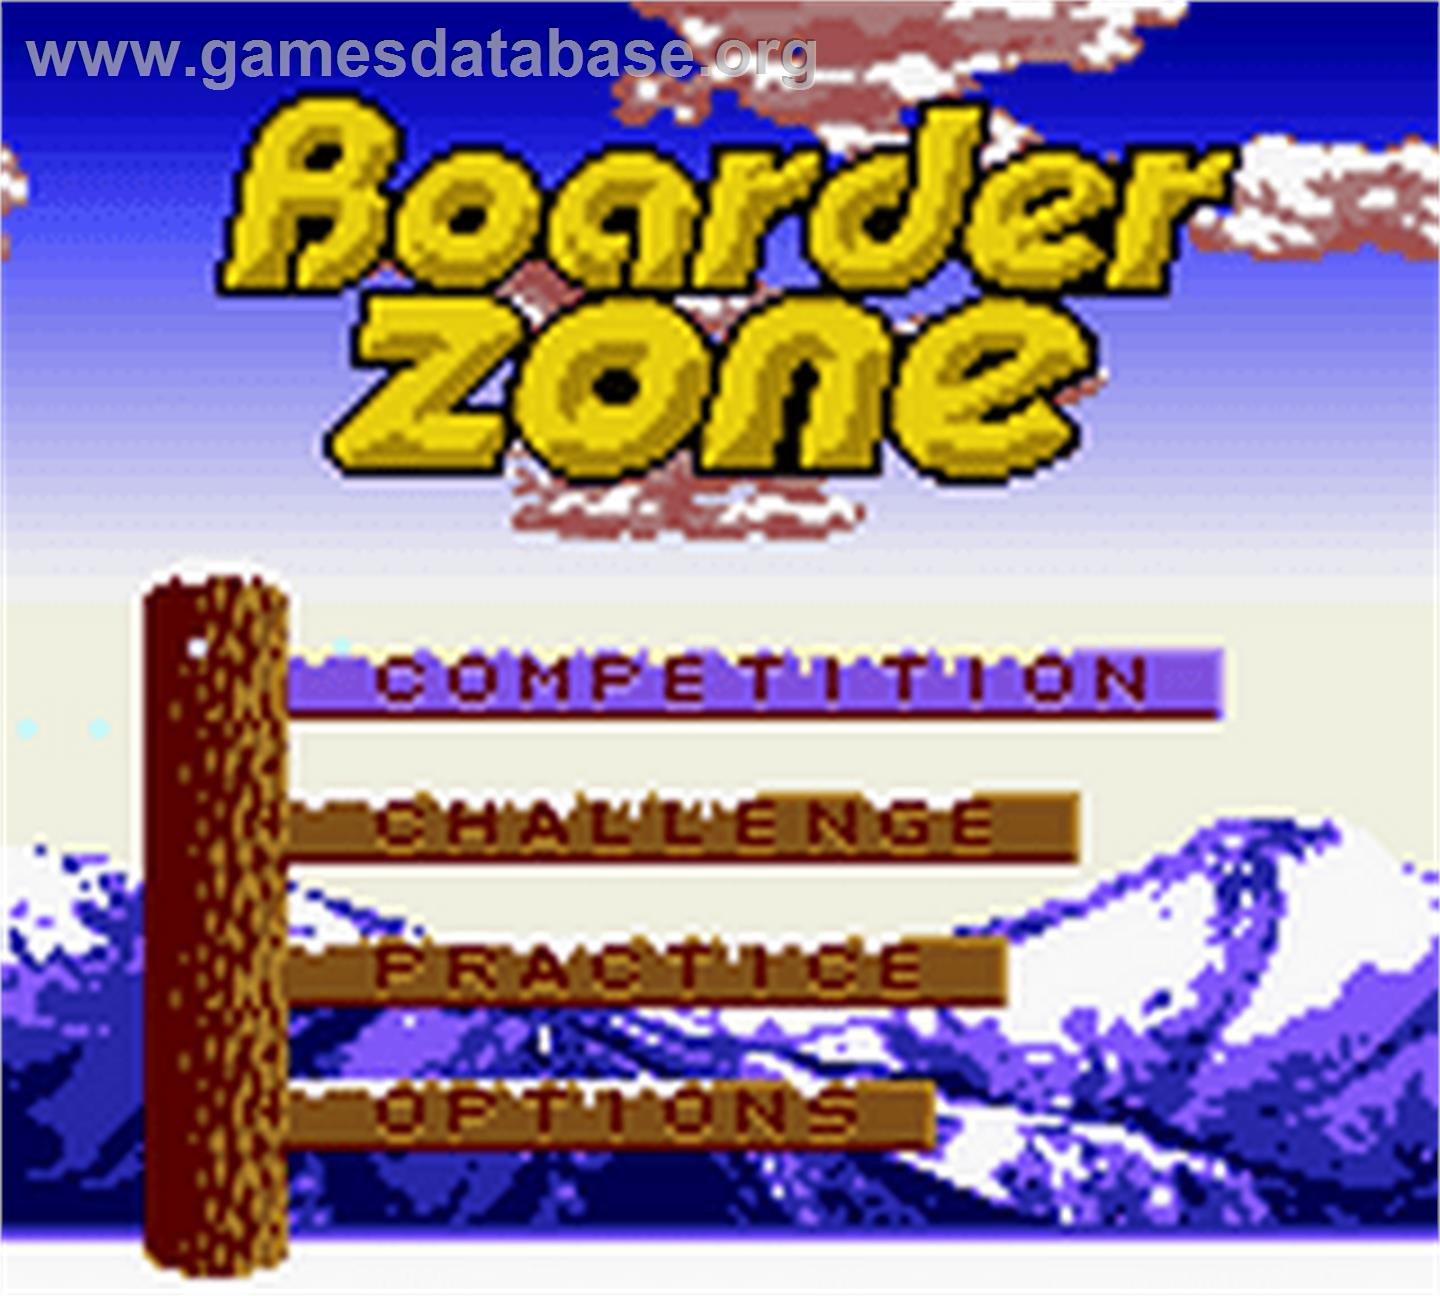 Boarder Zone - Nintendo Game Boy Color - Artwork - Title Screen